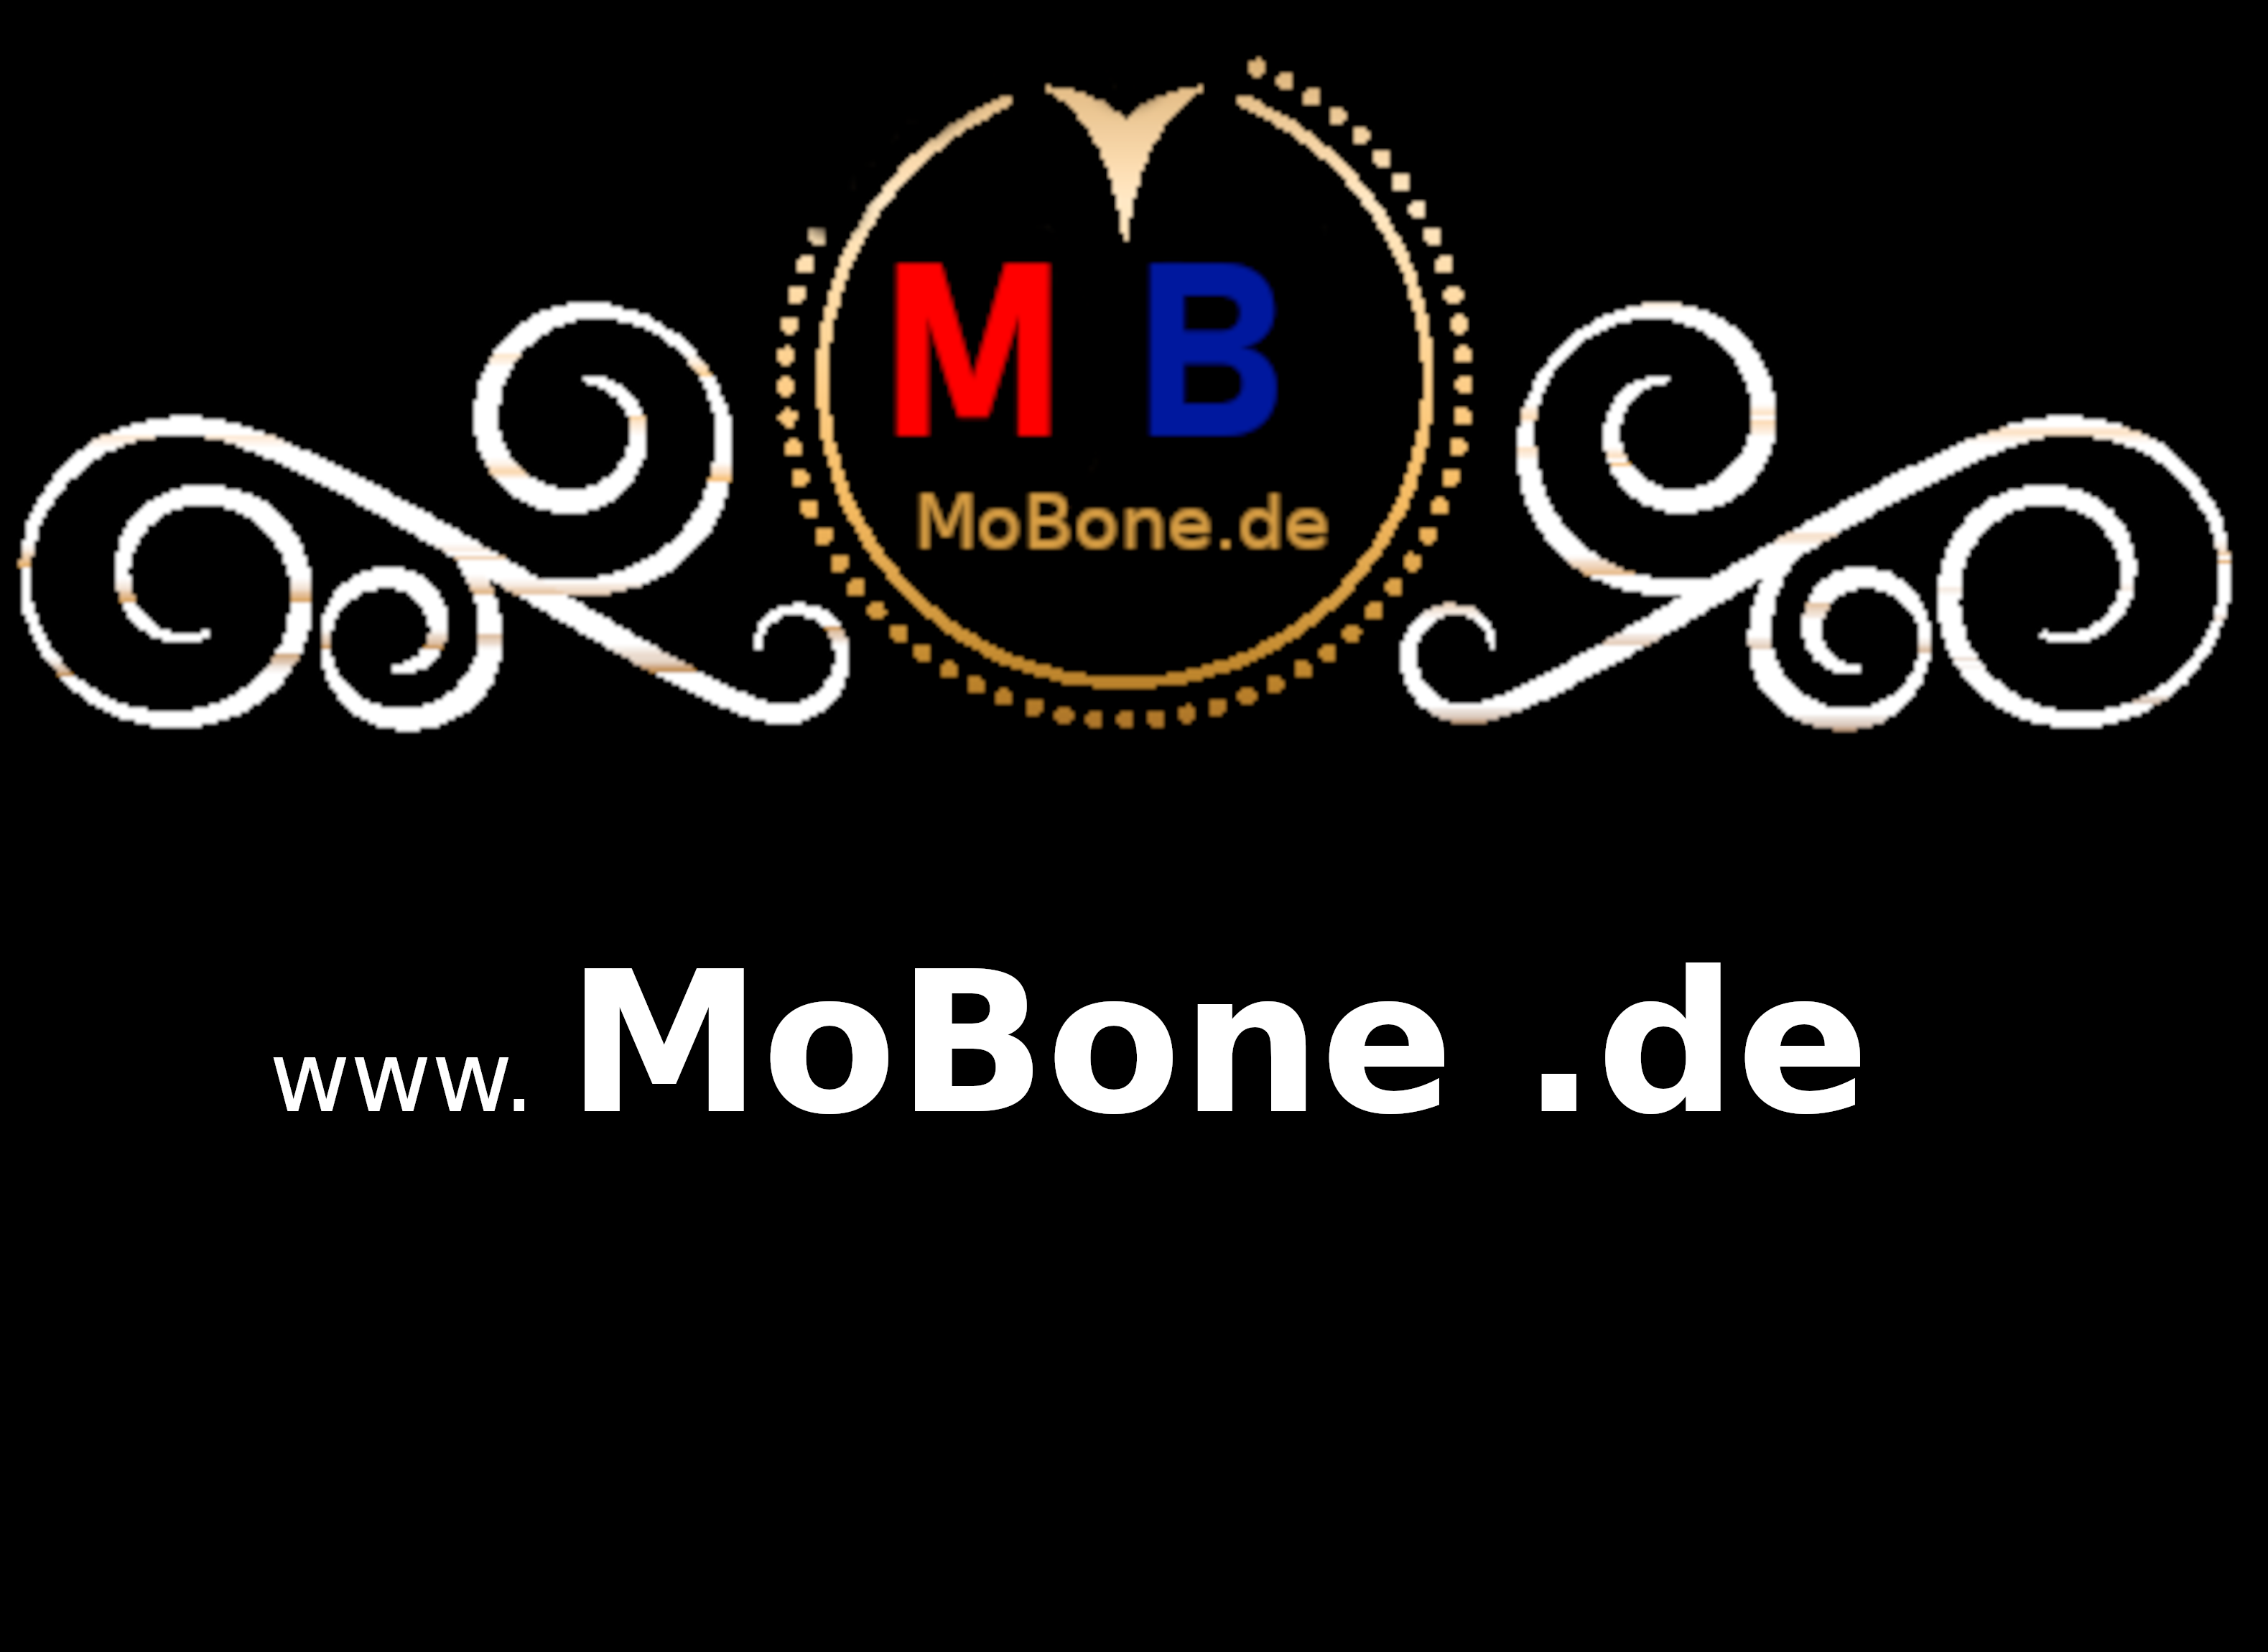 MoBone ).de)